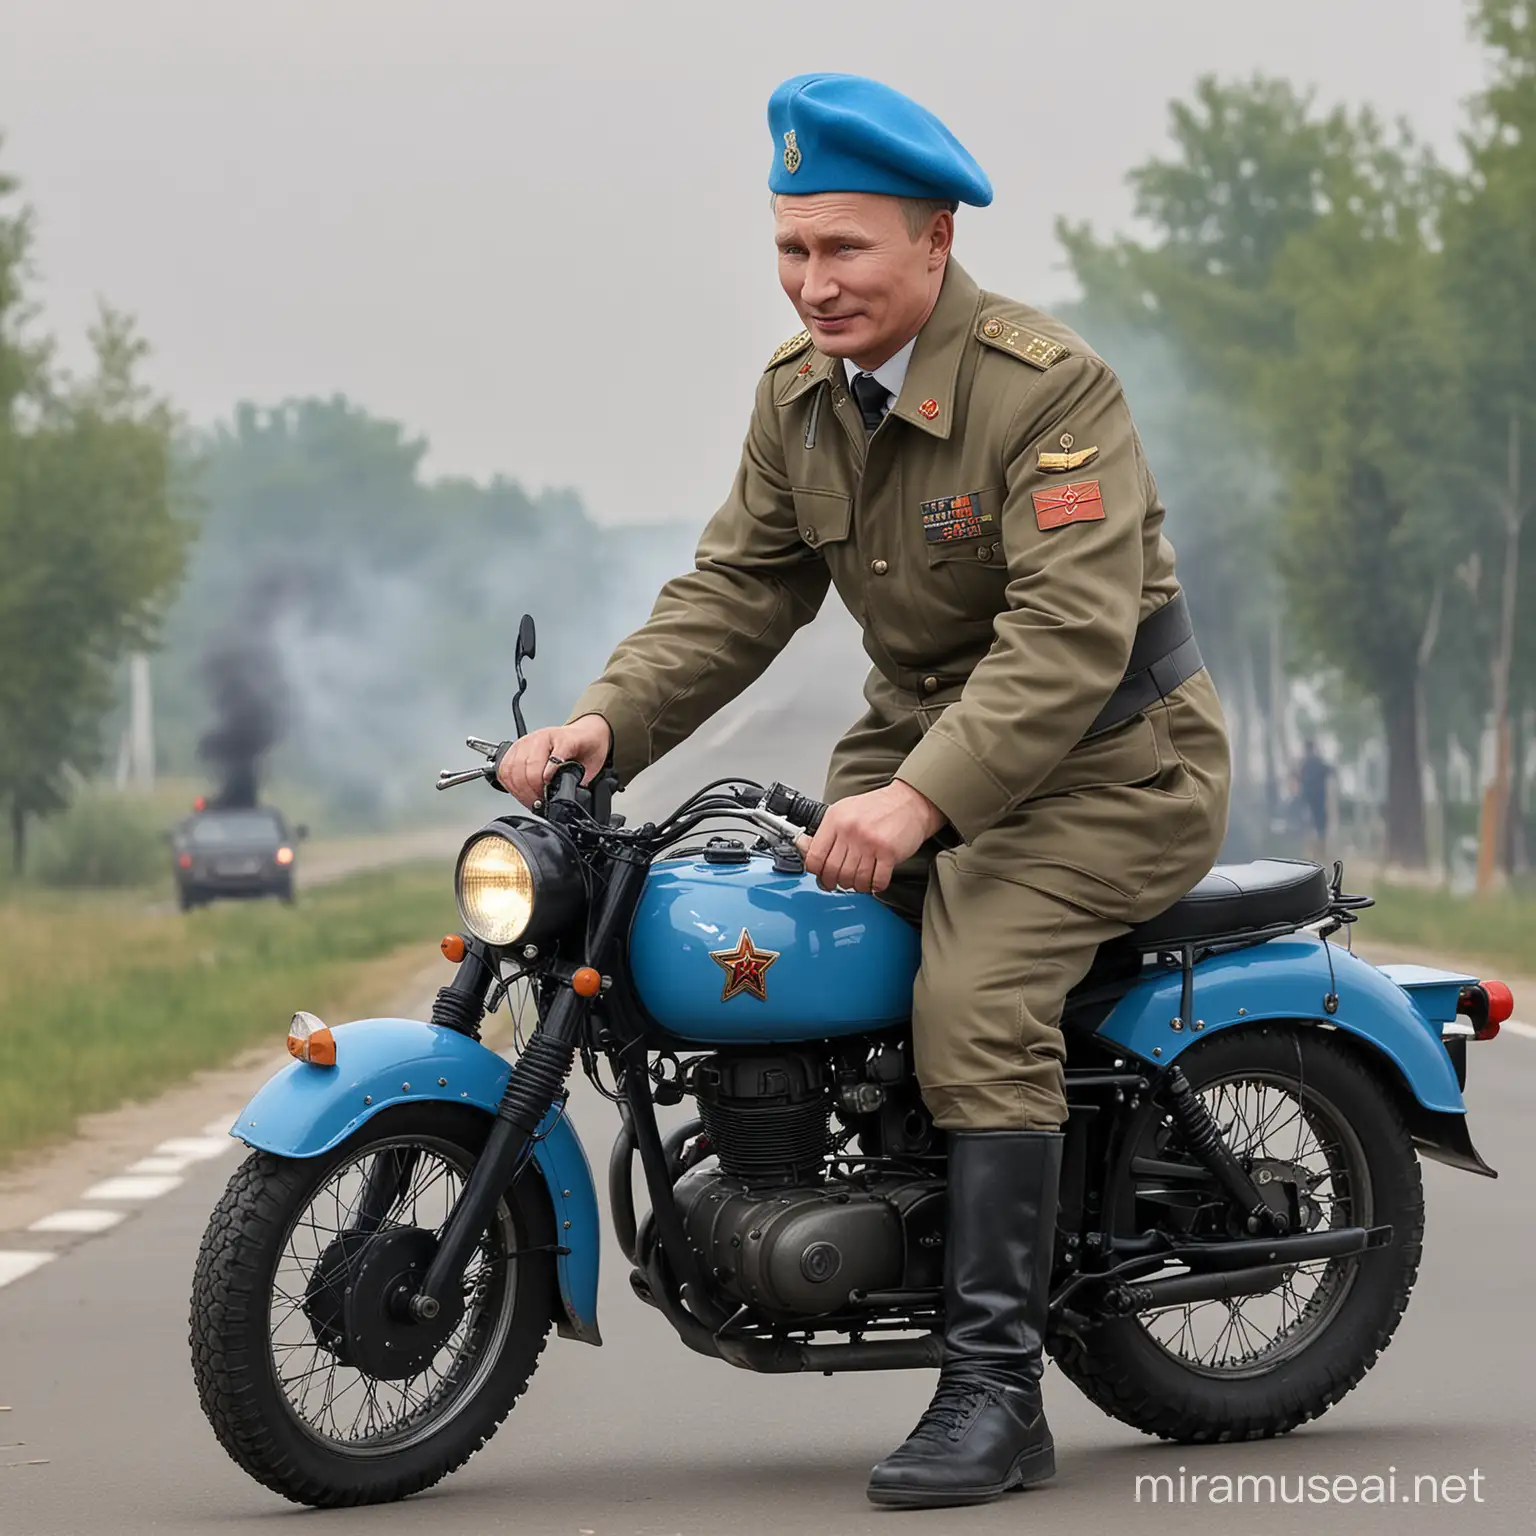 Realistic Putin Riding Vintage Soviet Motorcycle